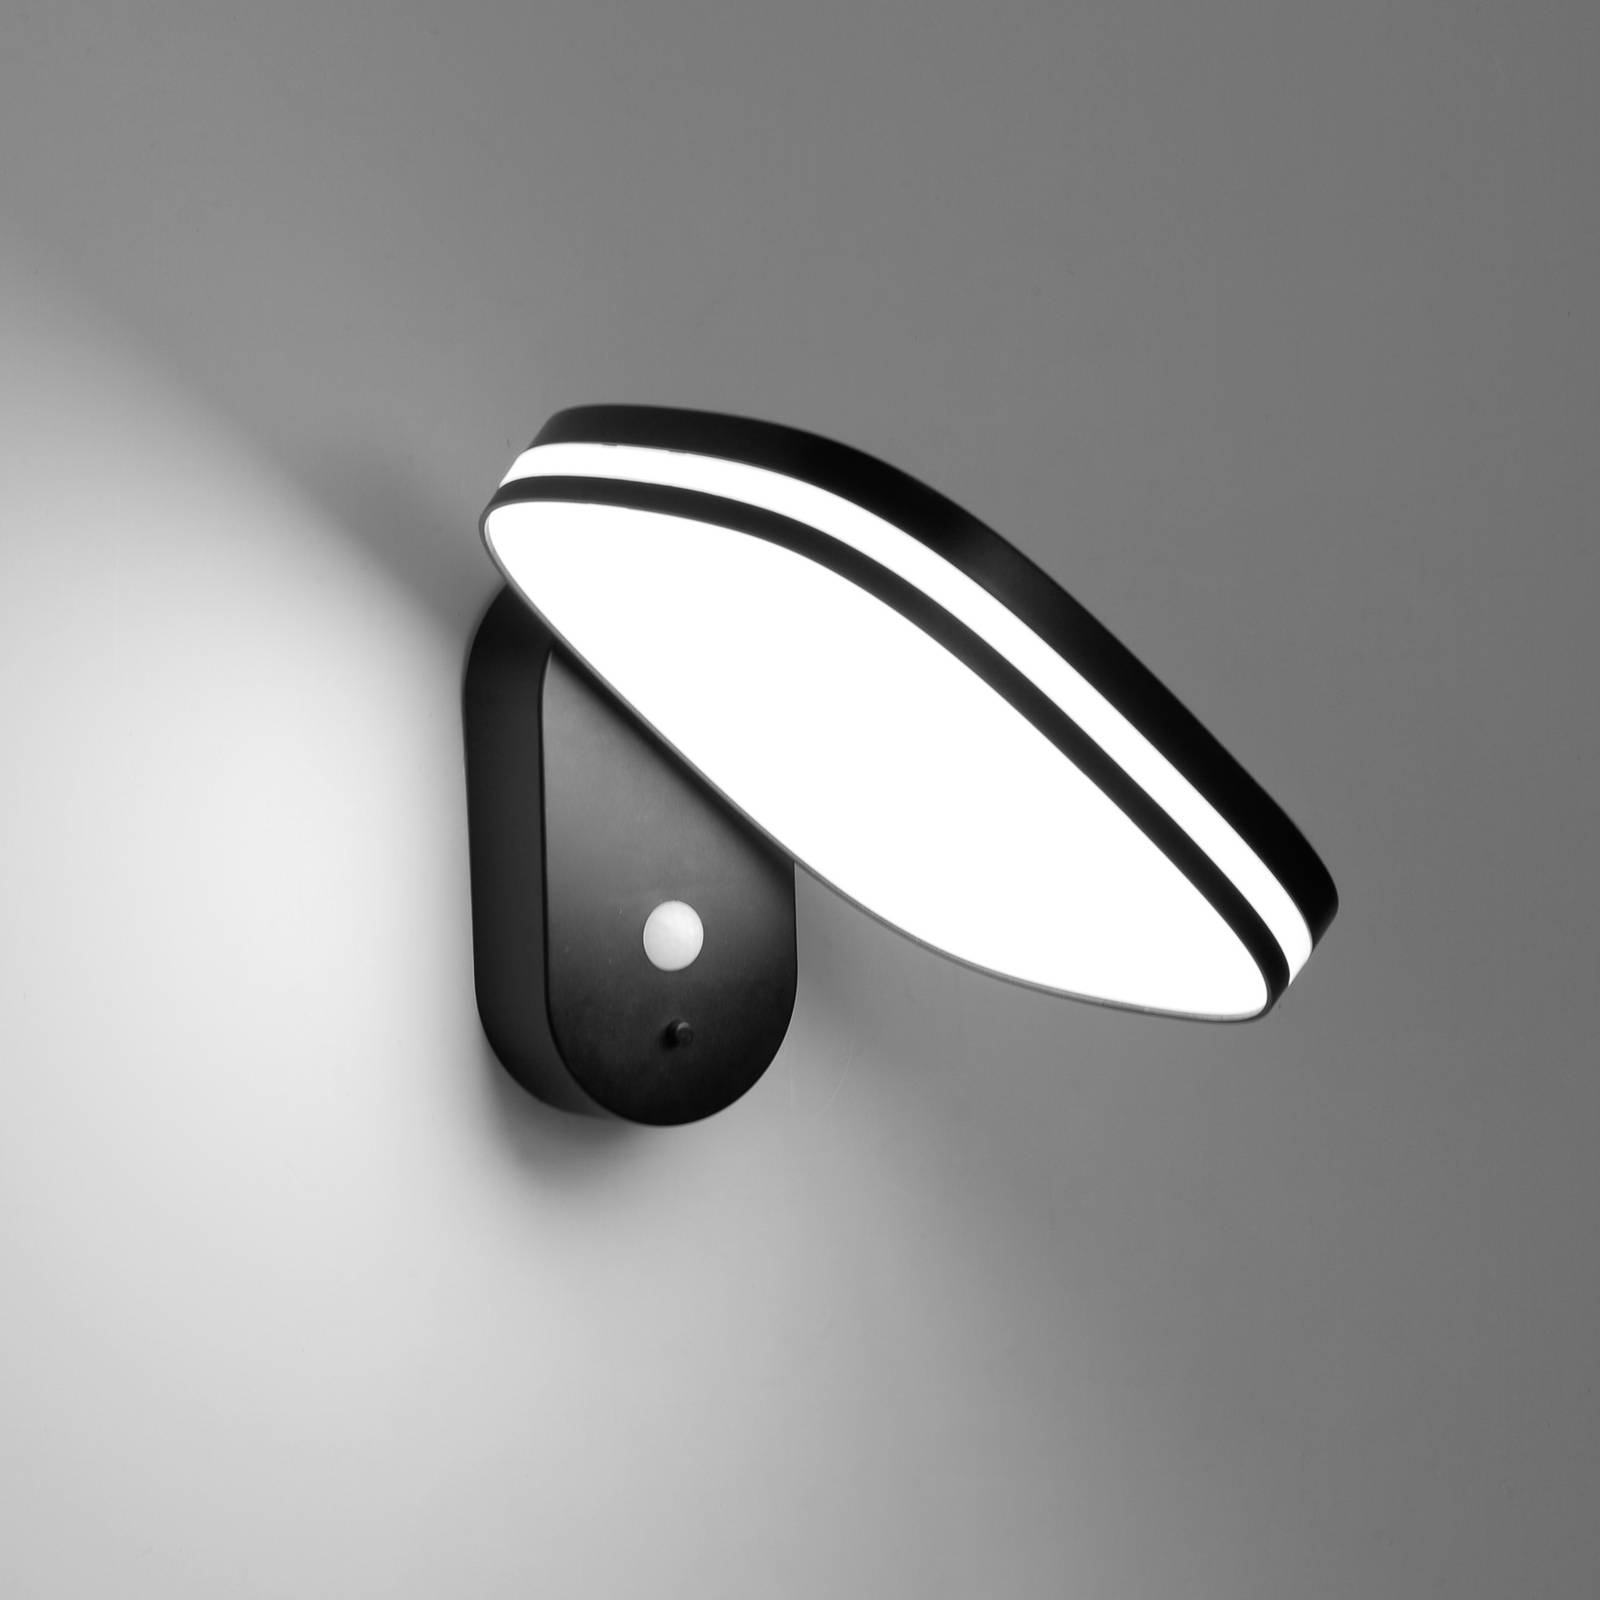 Image of Eco-Light Applique solari a LED Chicago, nero, sensore